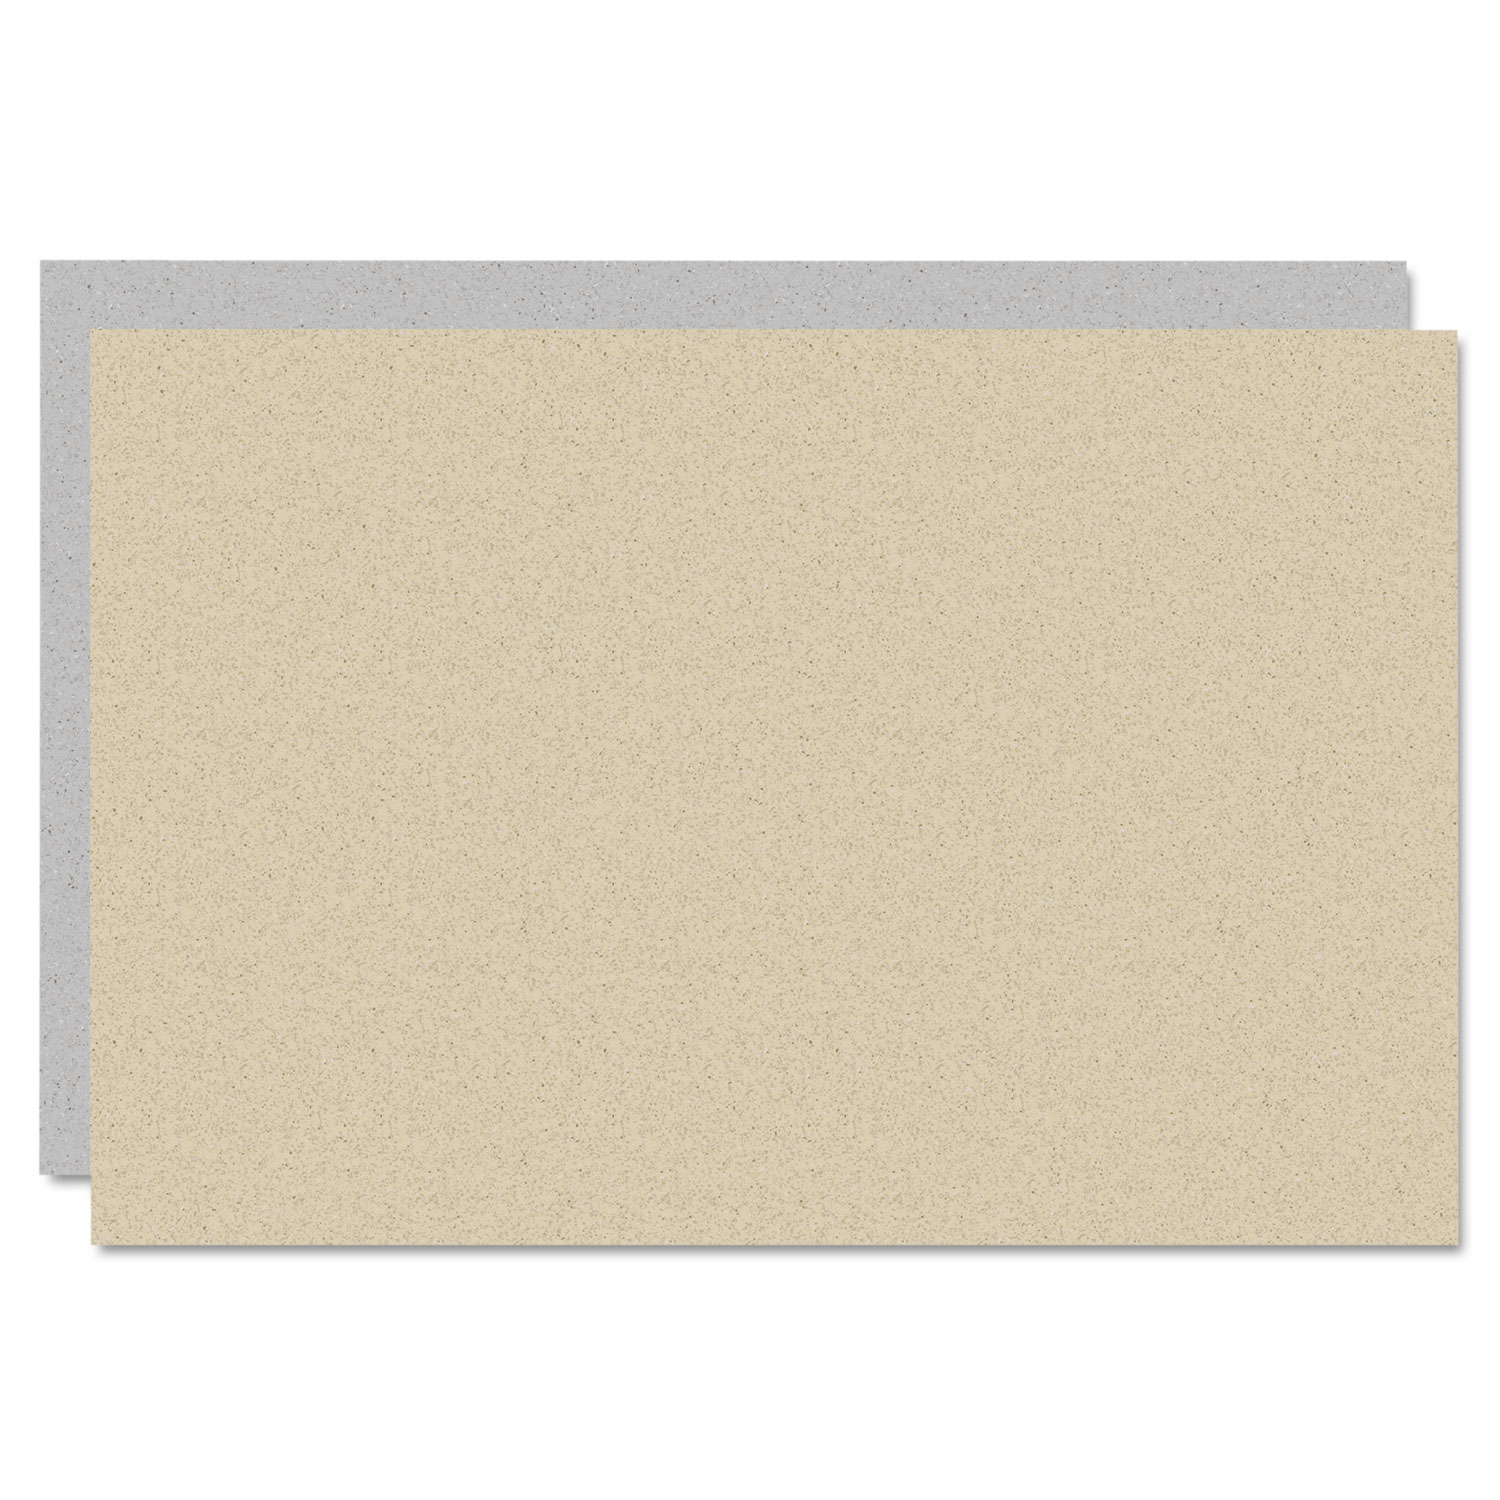 Too Cool Foam Board, 20x30, Sandstone/Graystone, 5/Carton